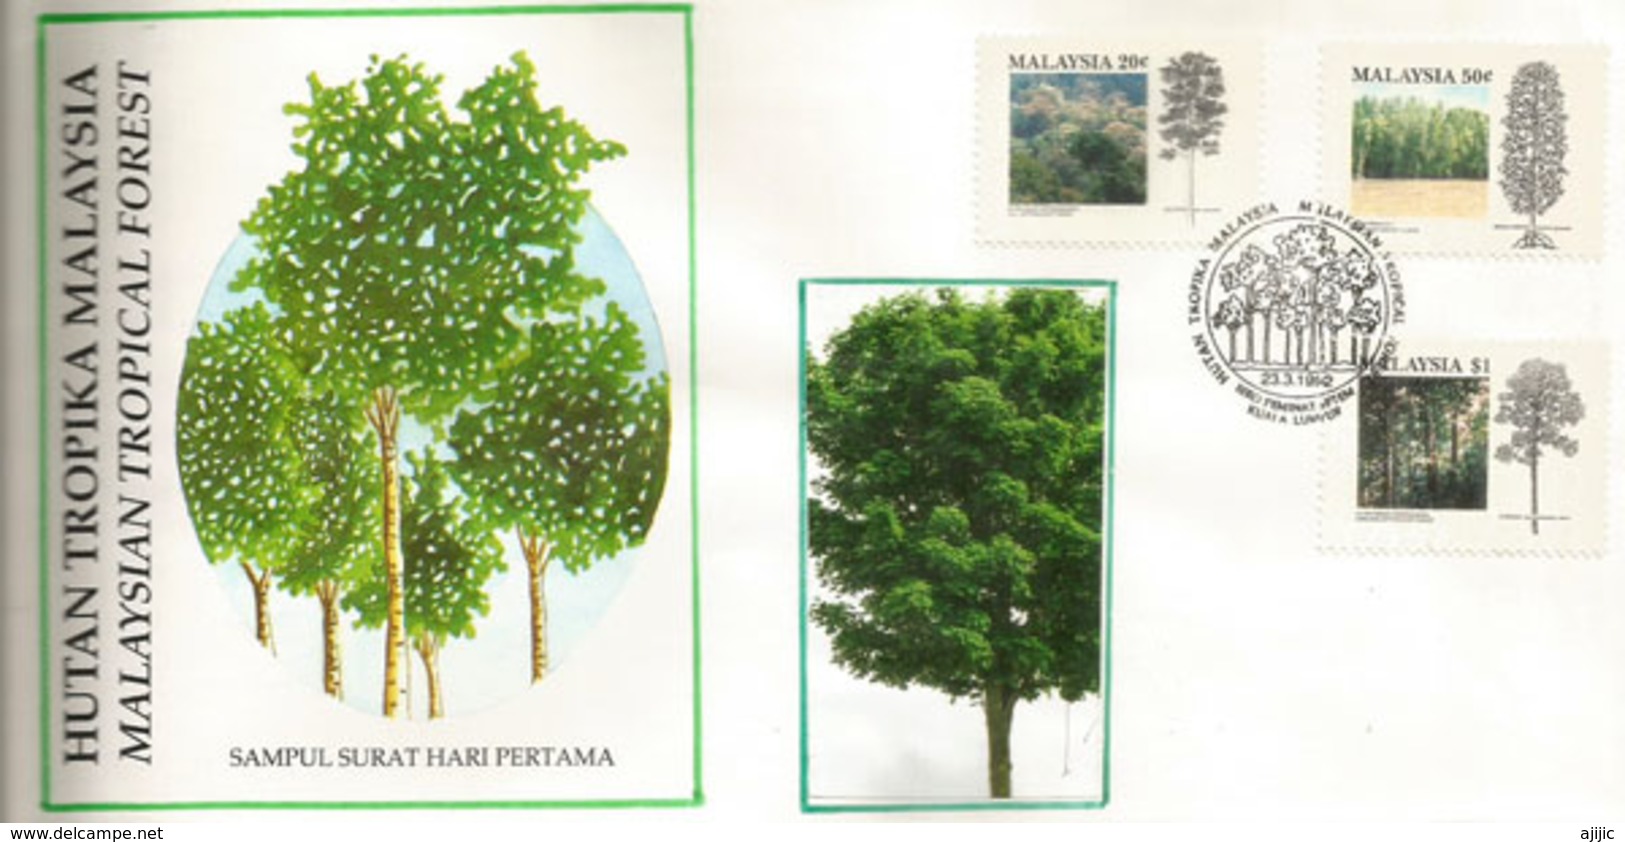 Les Arbres De Malaisie (Malaysia Tropical Forest),  FDC Malaisie 1992 - Arbres